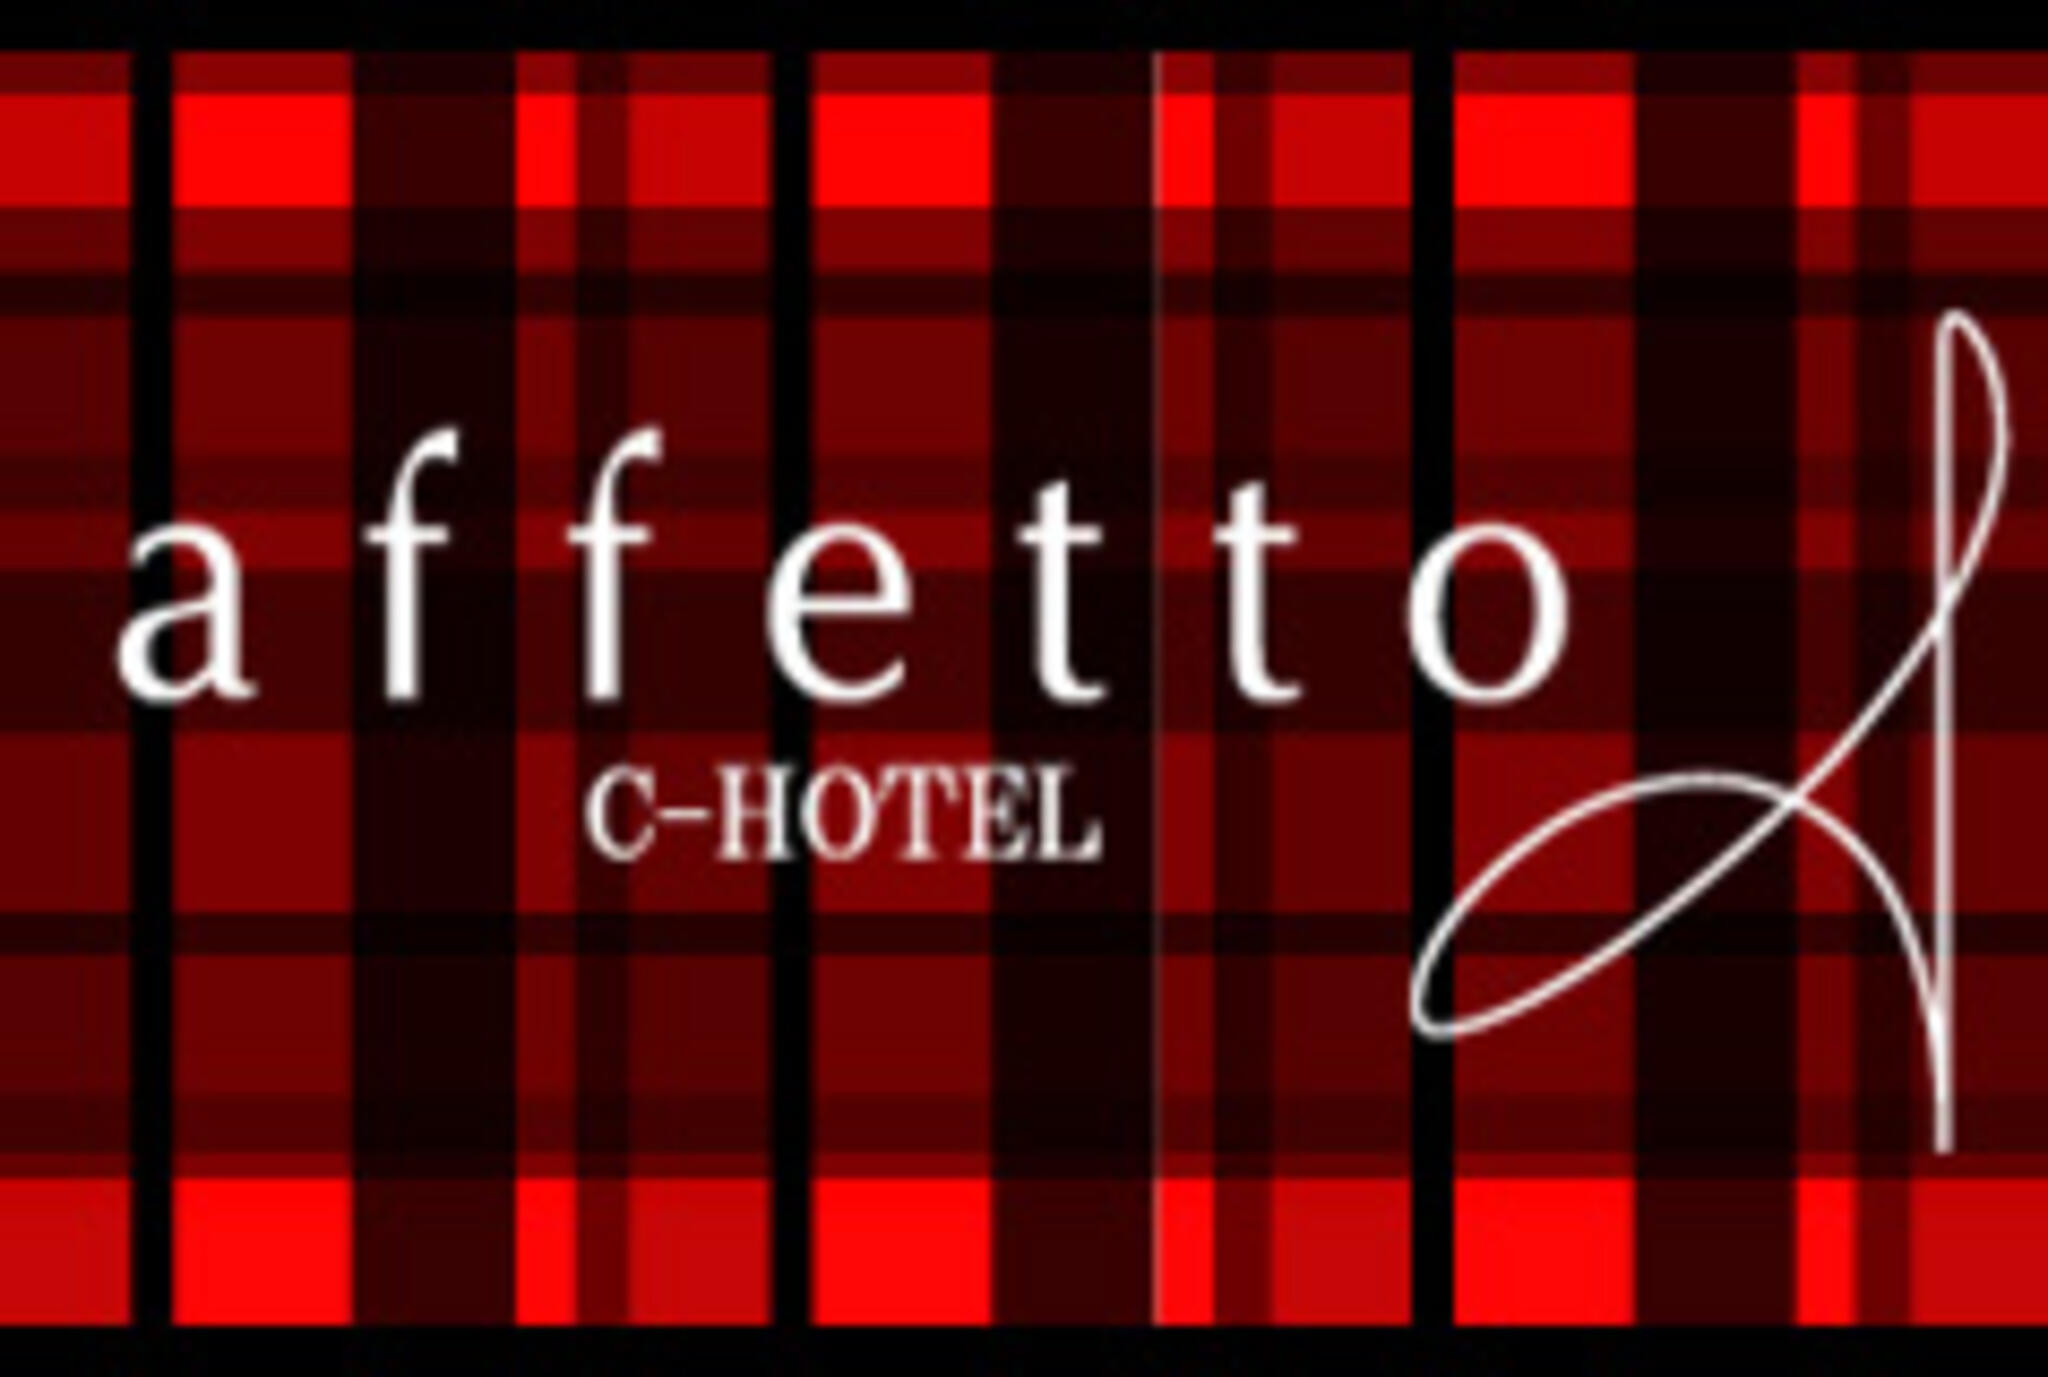 C-HOTEL affettoの代表写真7